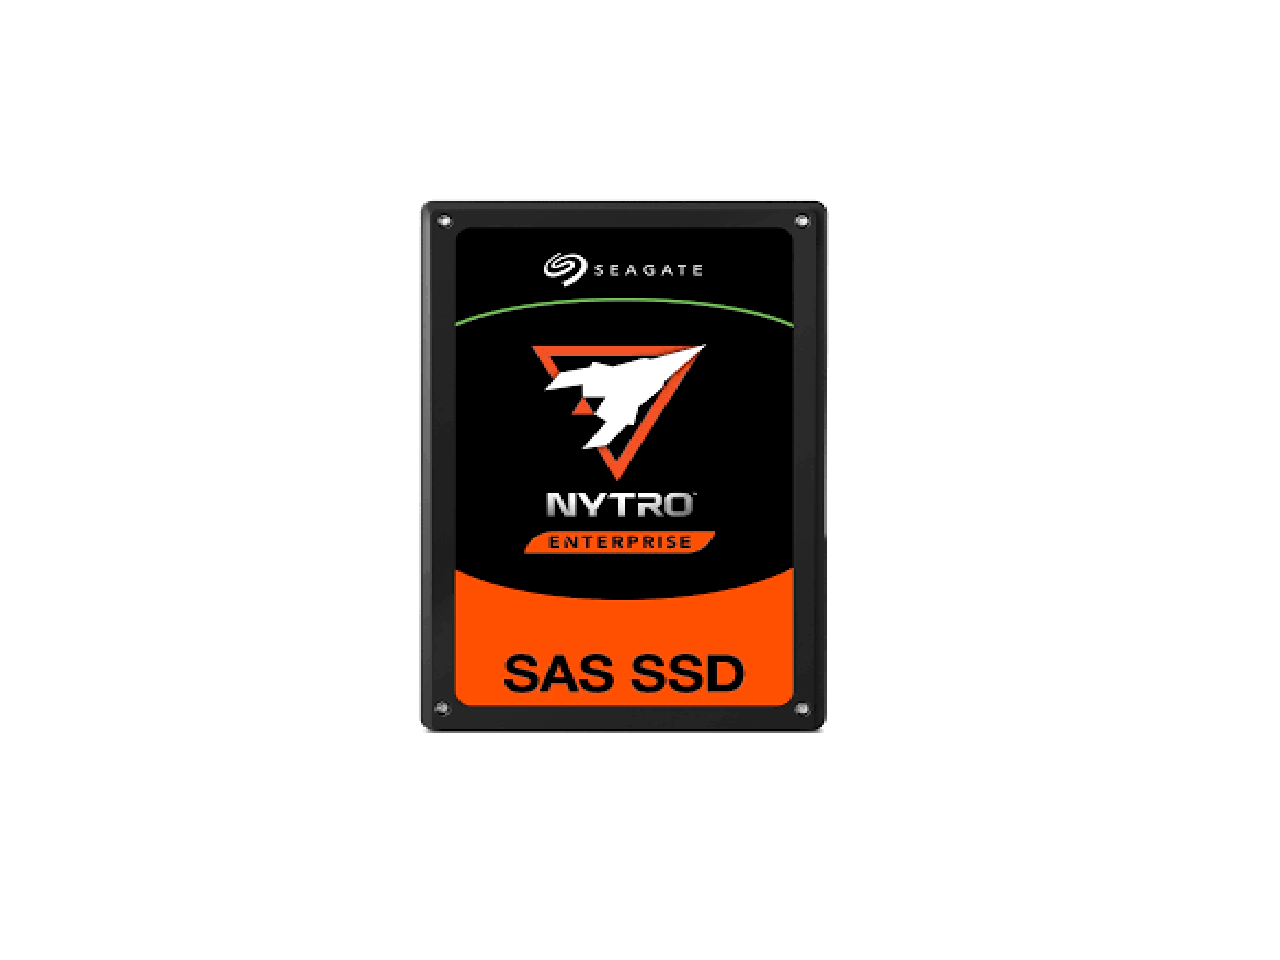 Seagate Nytro 3332 960Gb Sas 12Gb/S Enterprise Solid State Disk - Xs960Se70084